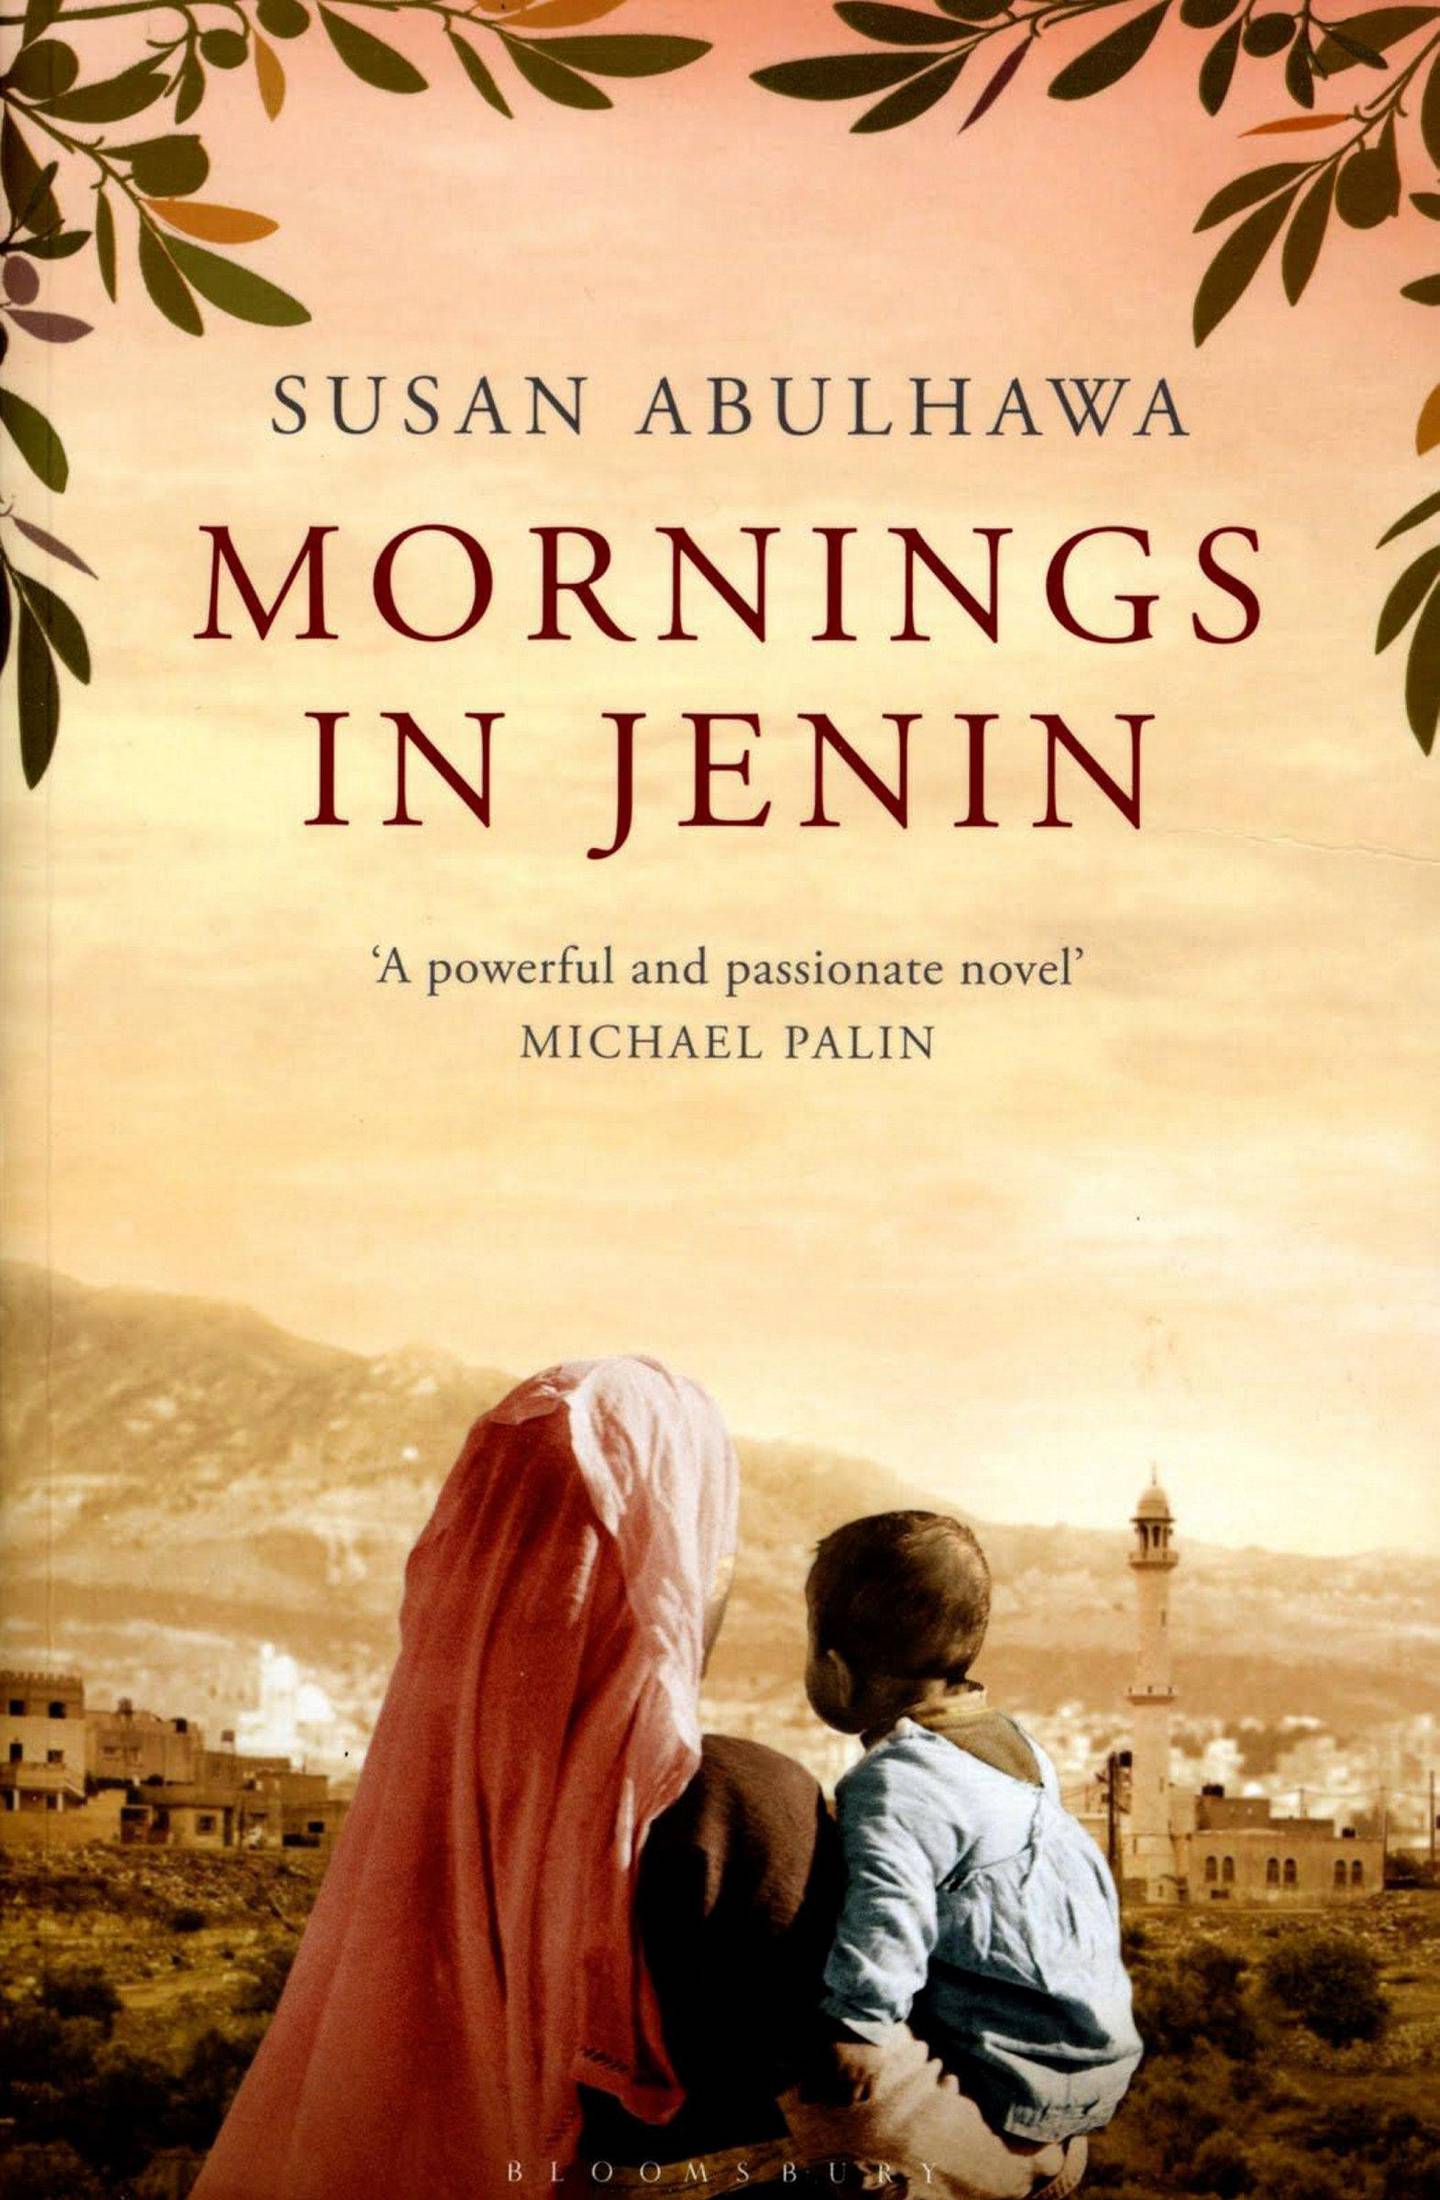 Mornings in Jenin by Susan Abulhawa. Courtesy Bloomsbury